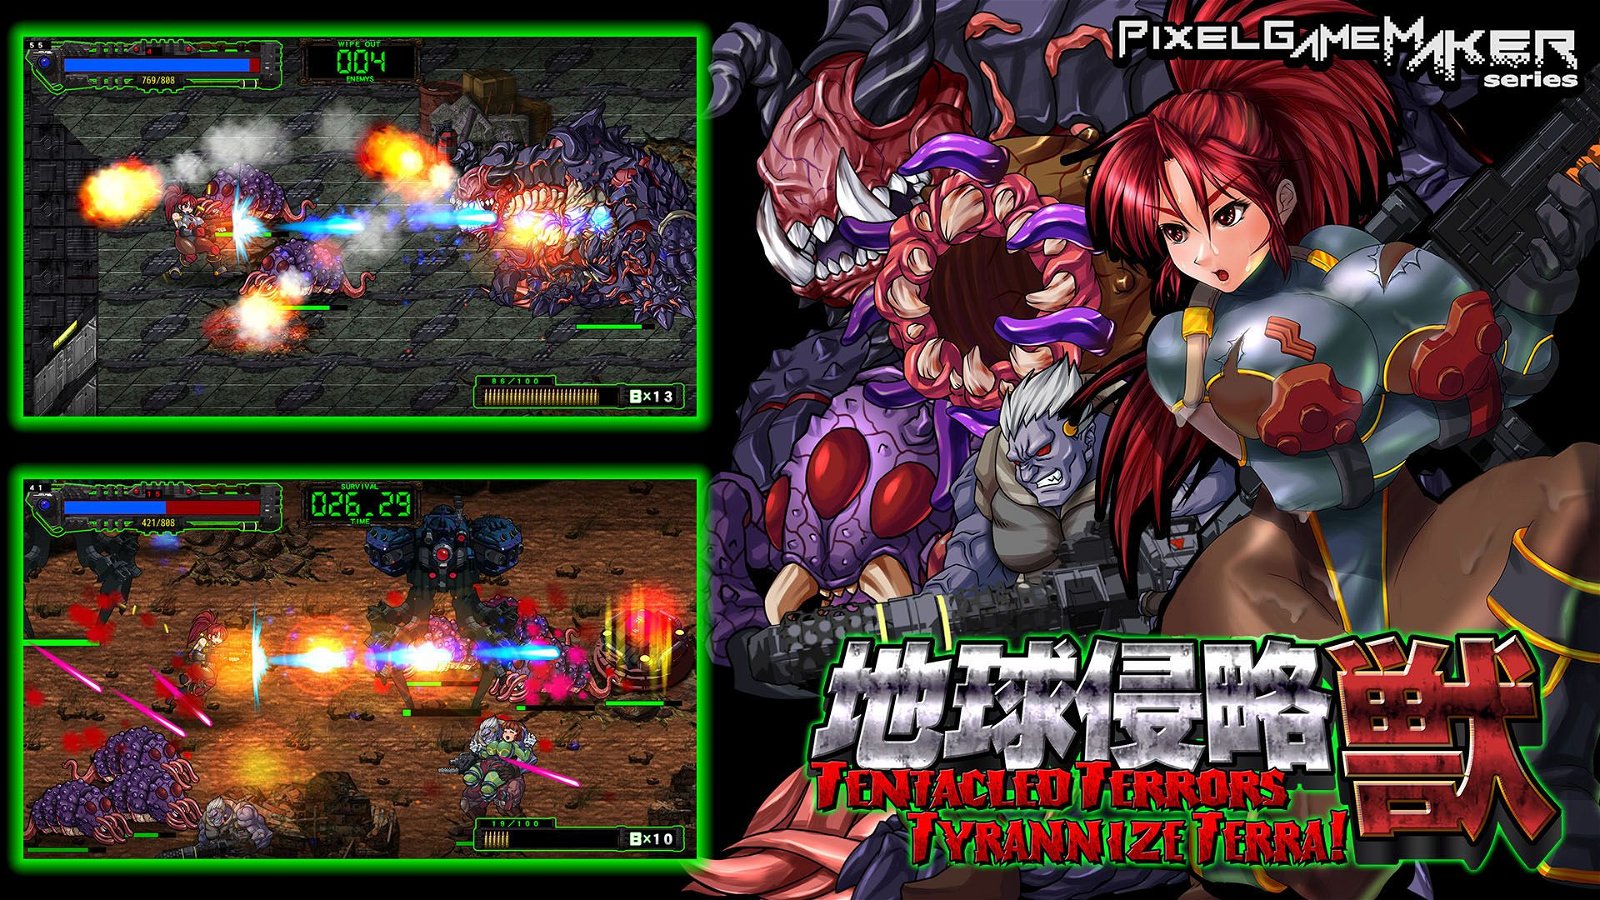 Image of Pixel Game Maker Series Tentacled Terrors Tyrannize Terra!